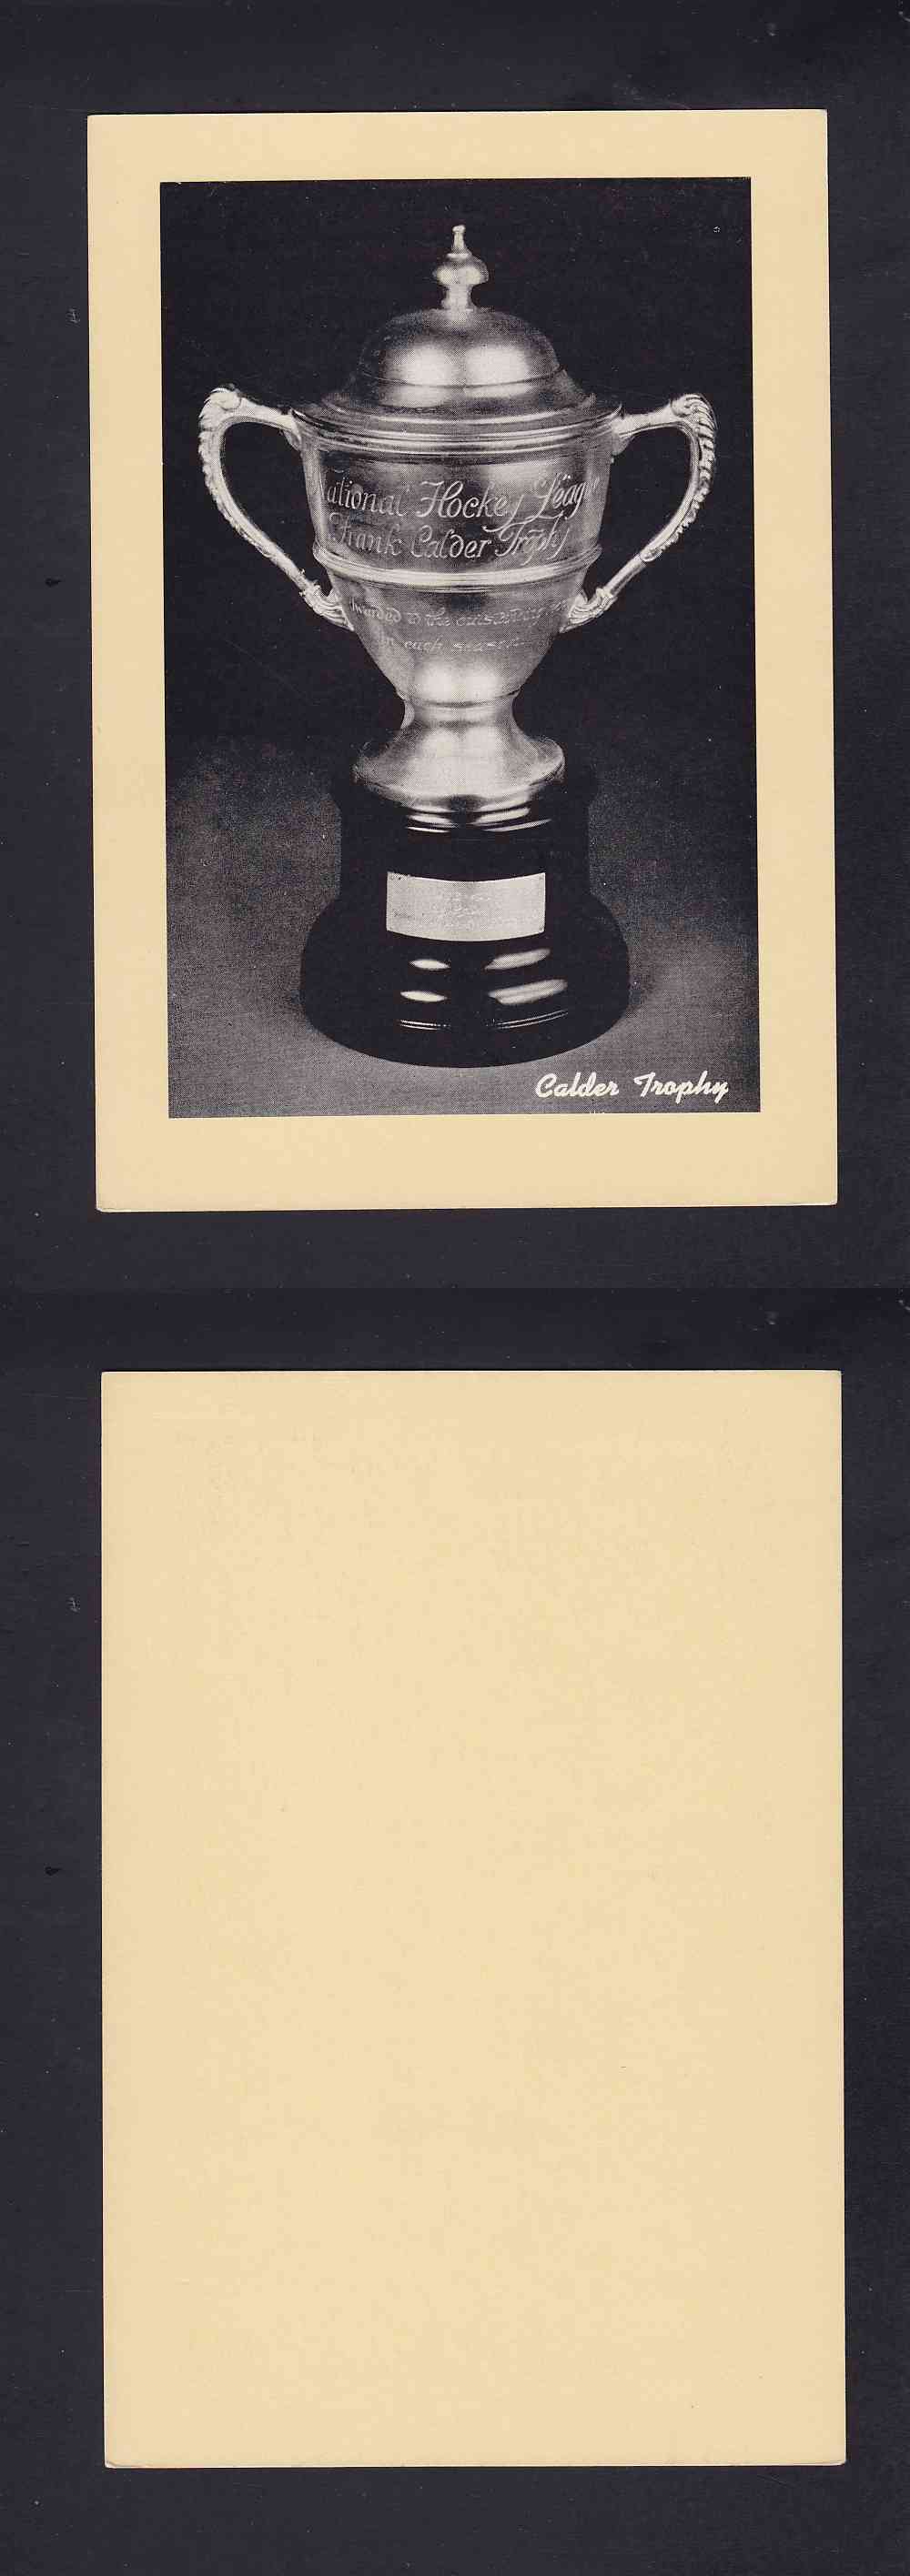 1934-43 BEEHIVE PHOTO GR.1 CALDER TROPHY photo